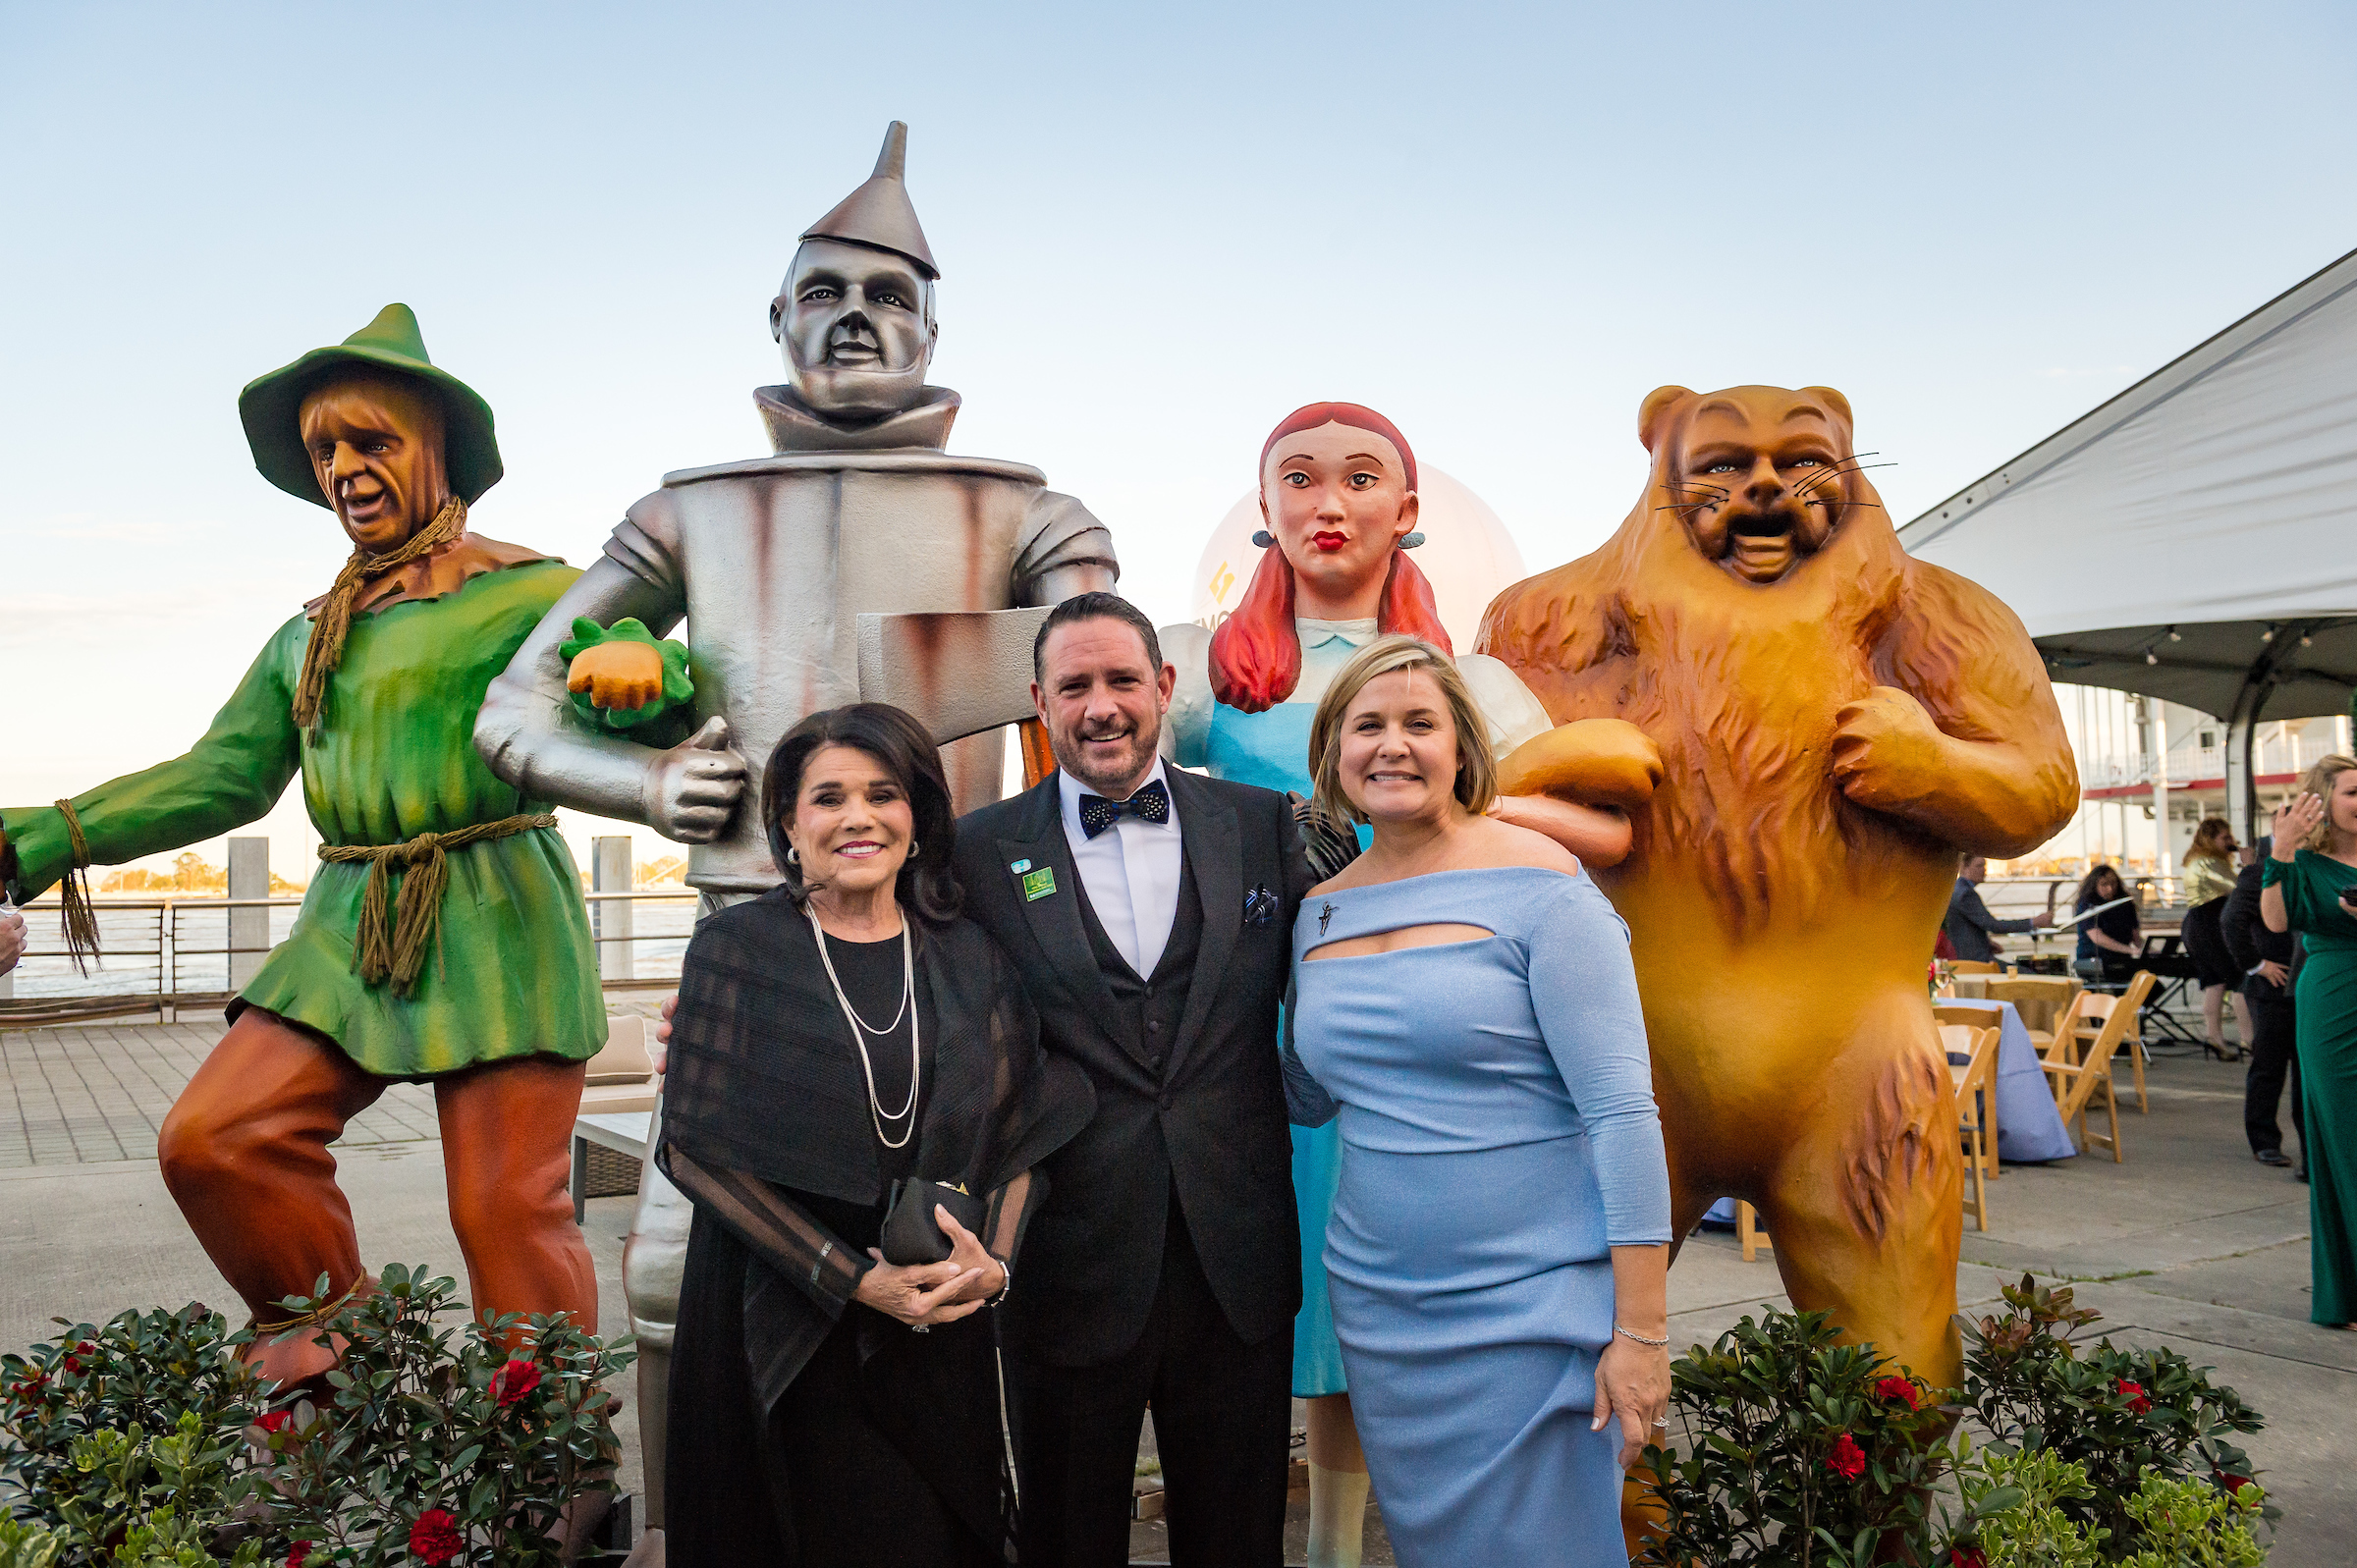 CHNOLA team members posing in front of Wizard of Oz display